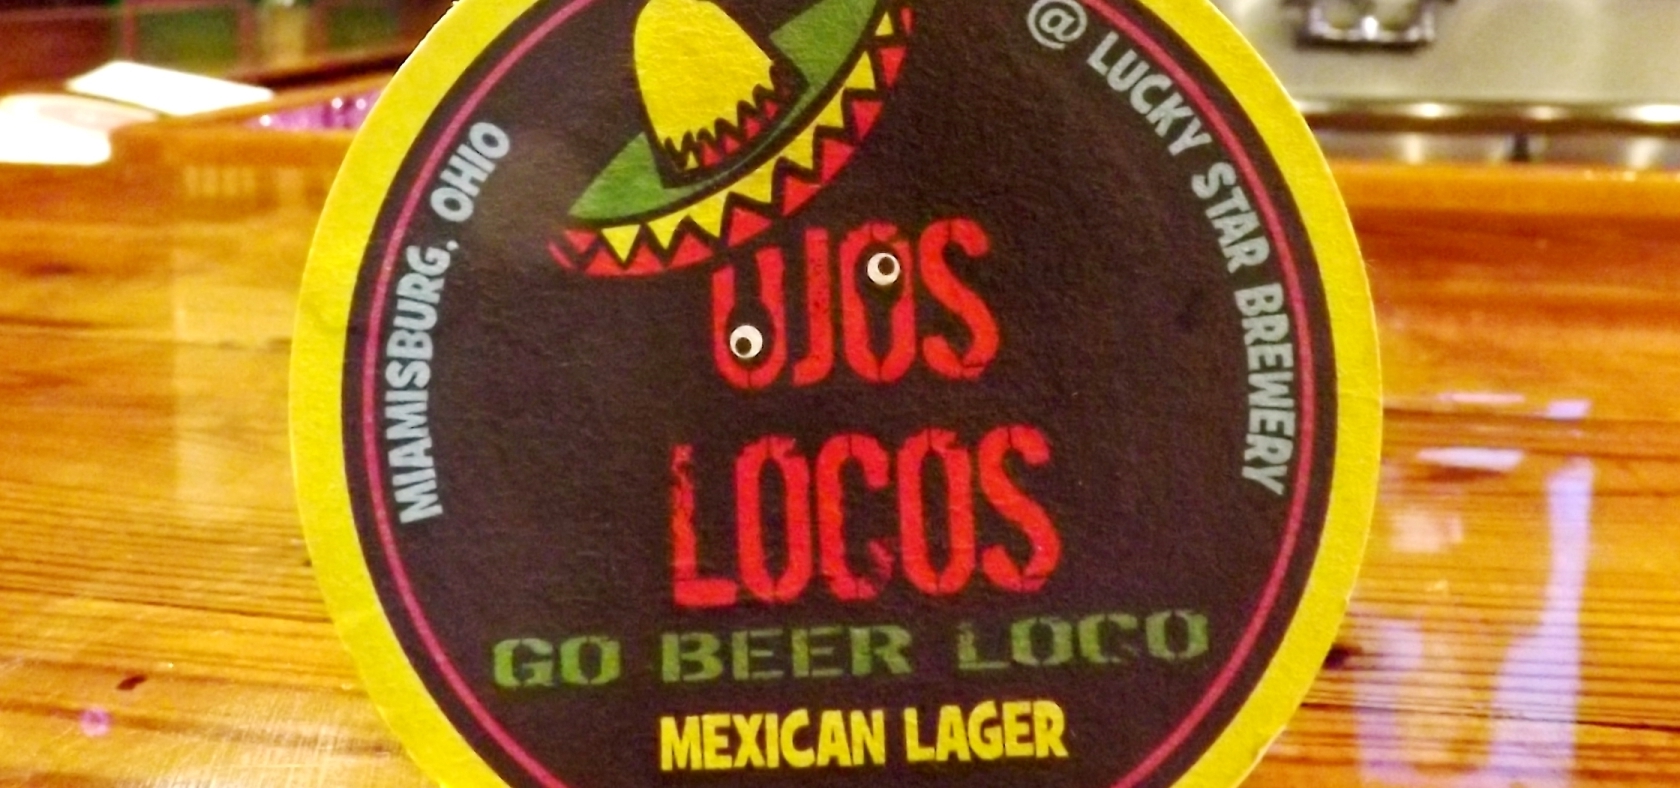 Lucky Star Brewery | Ojos Locos